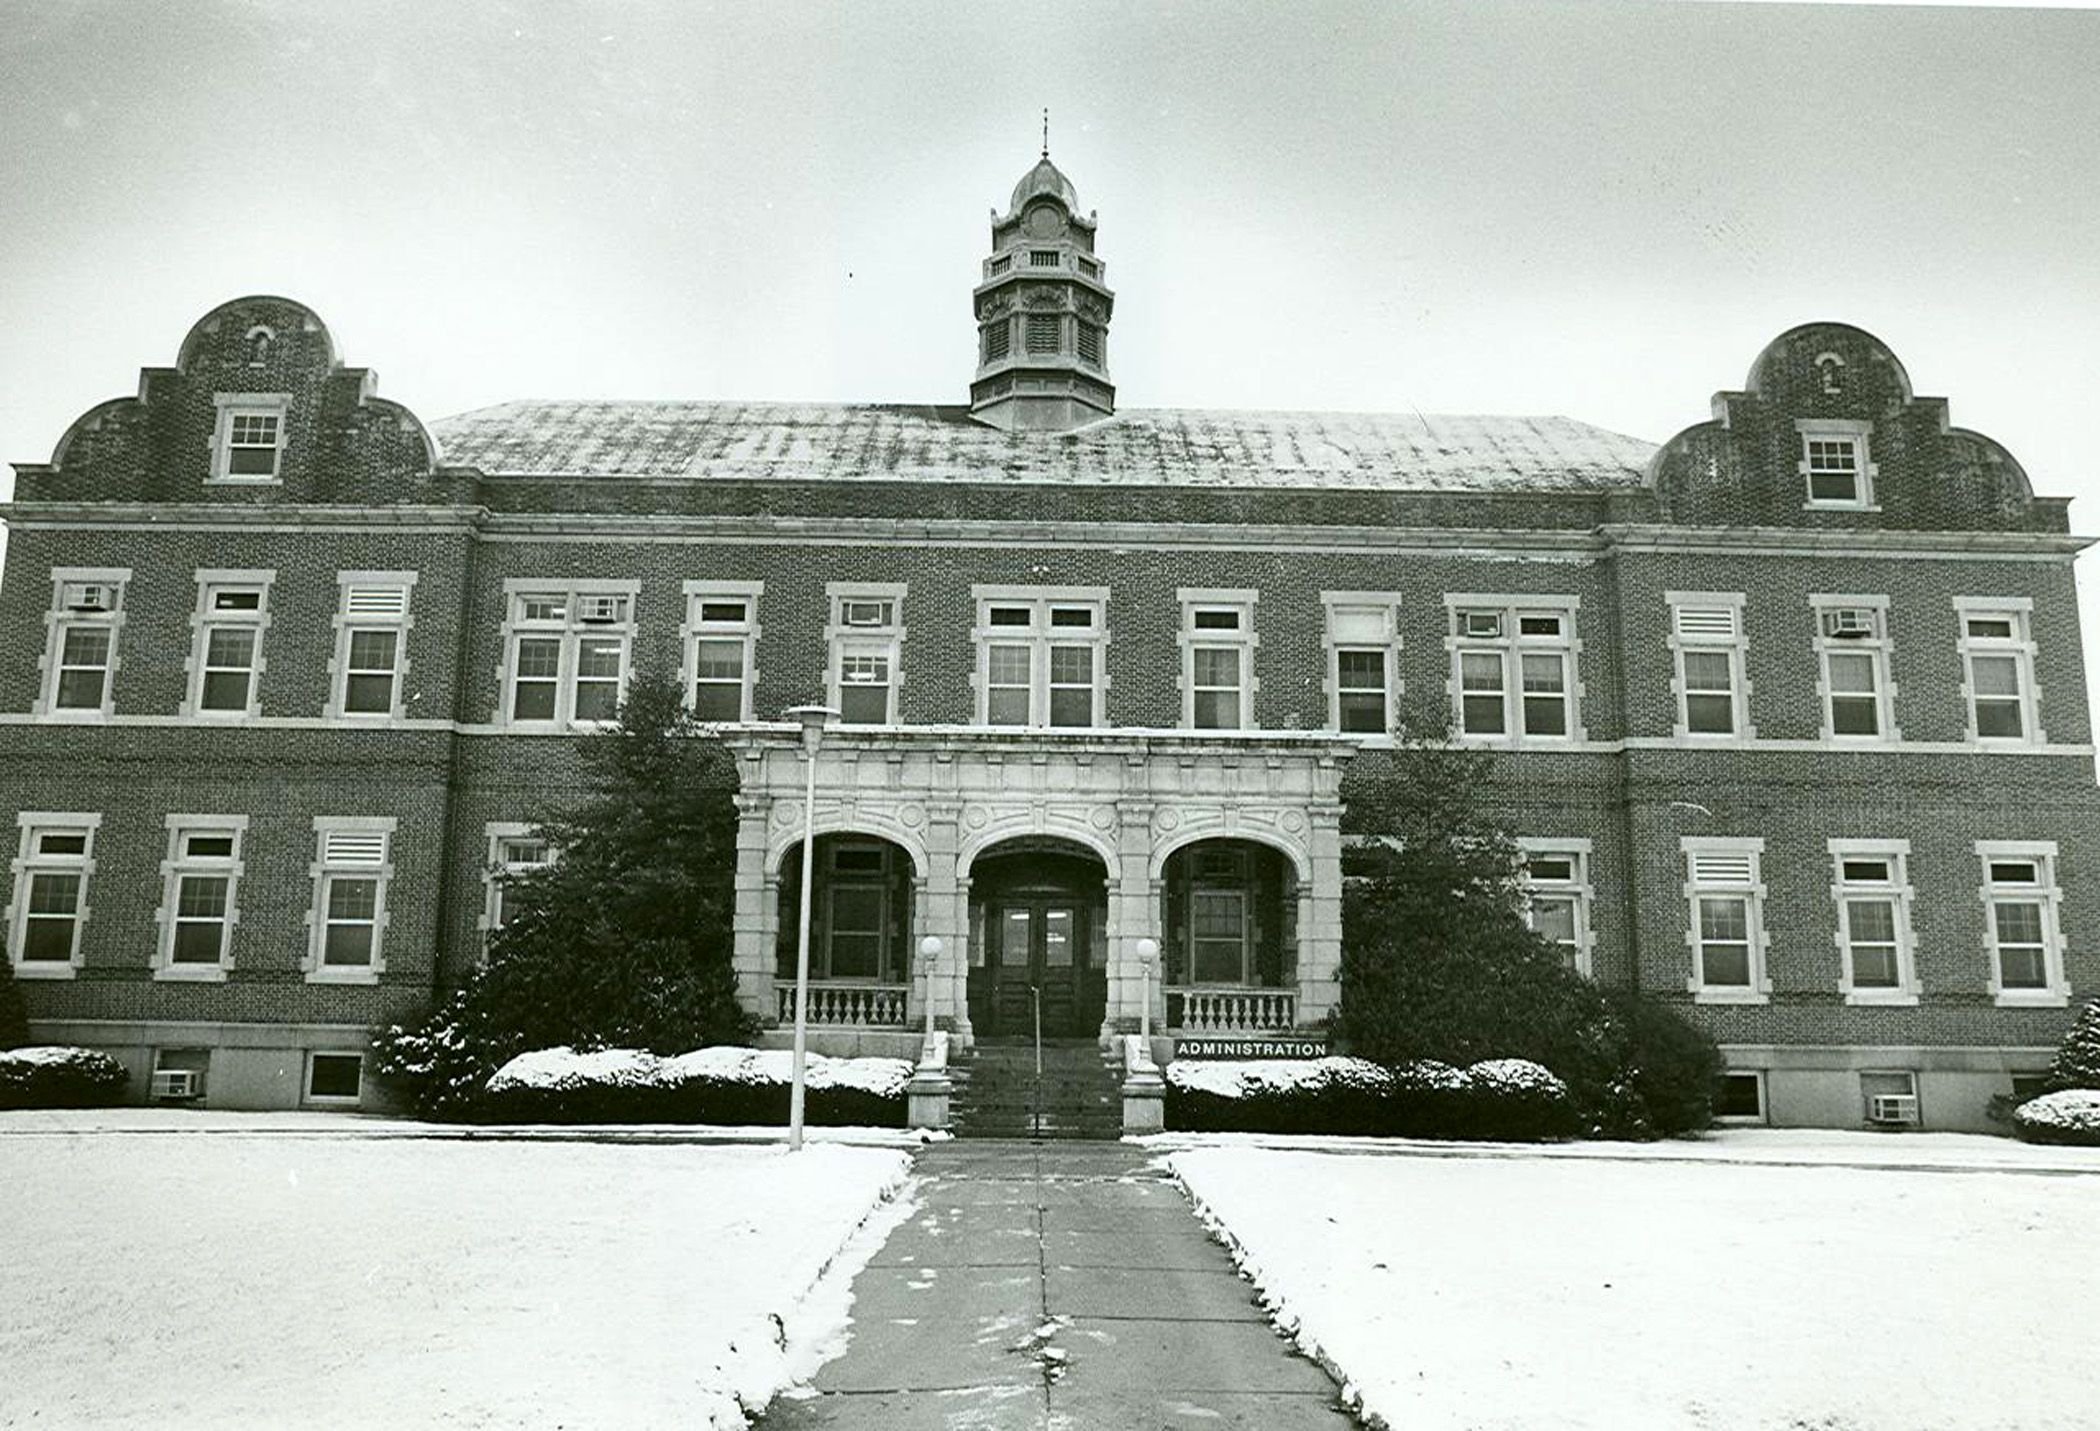 Pennhurst State School And Hospital